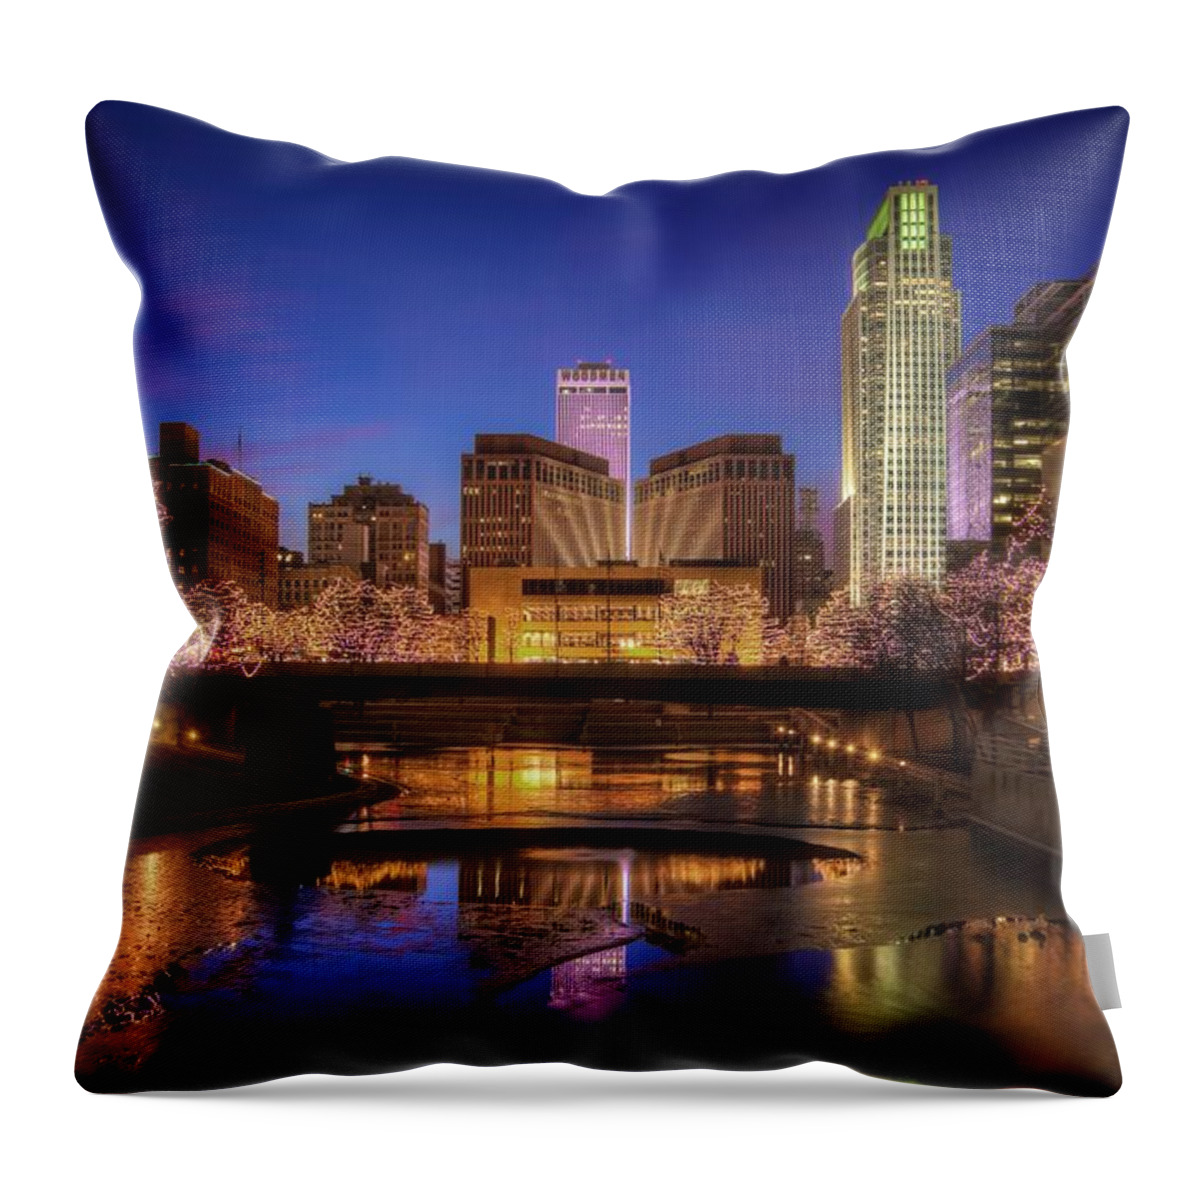 Omaha Nebraska Throw Pillow featuring the photograph Night Cityscape - Omaha - Nebraska by Nikolyn McDonald